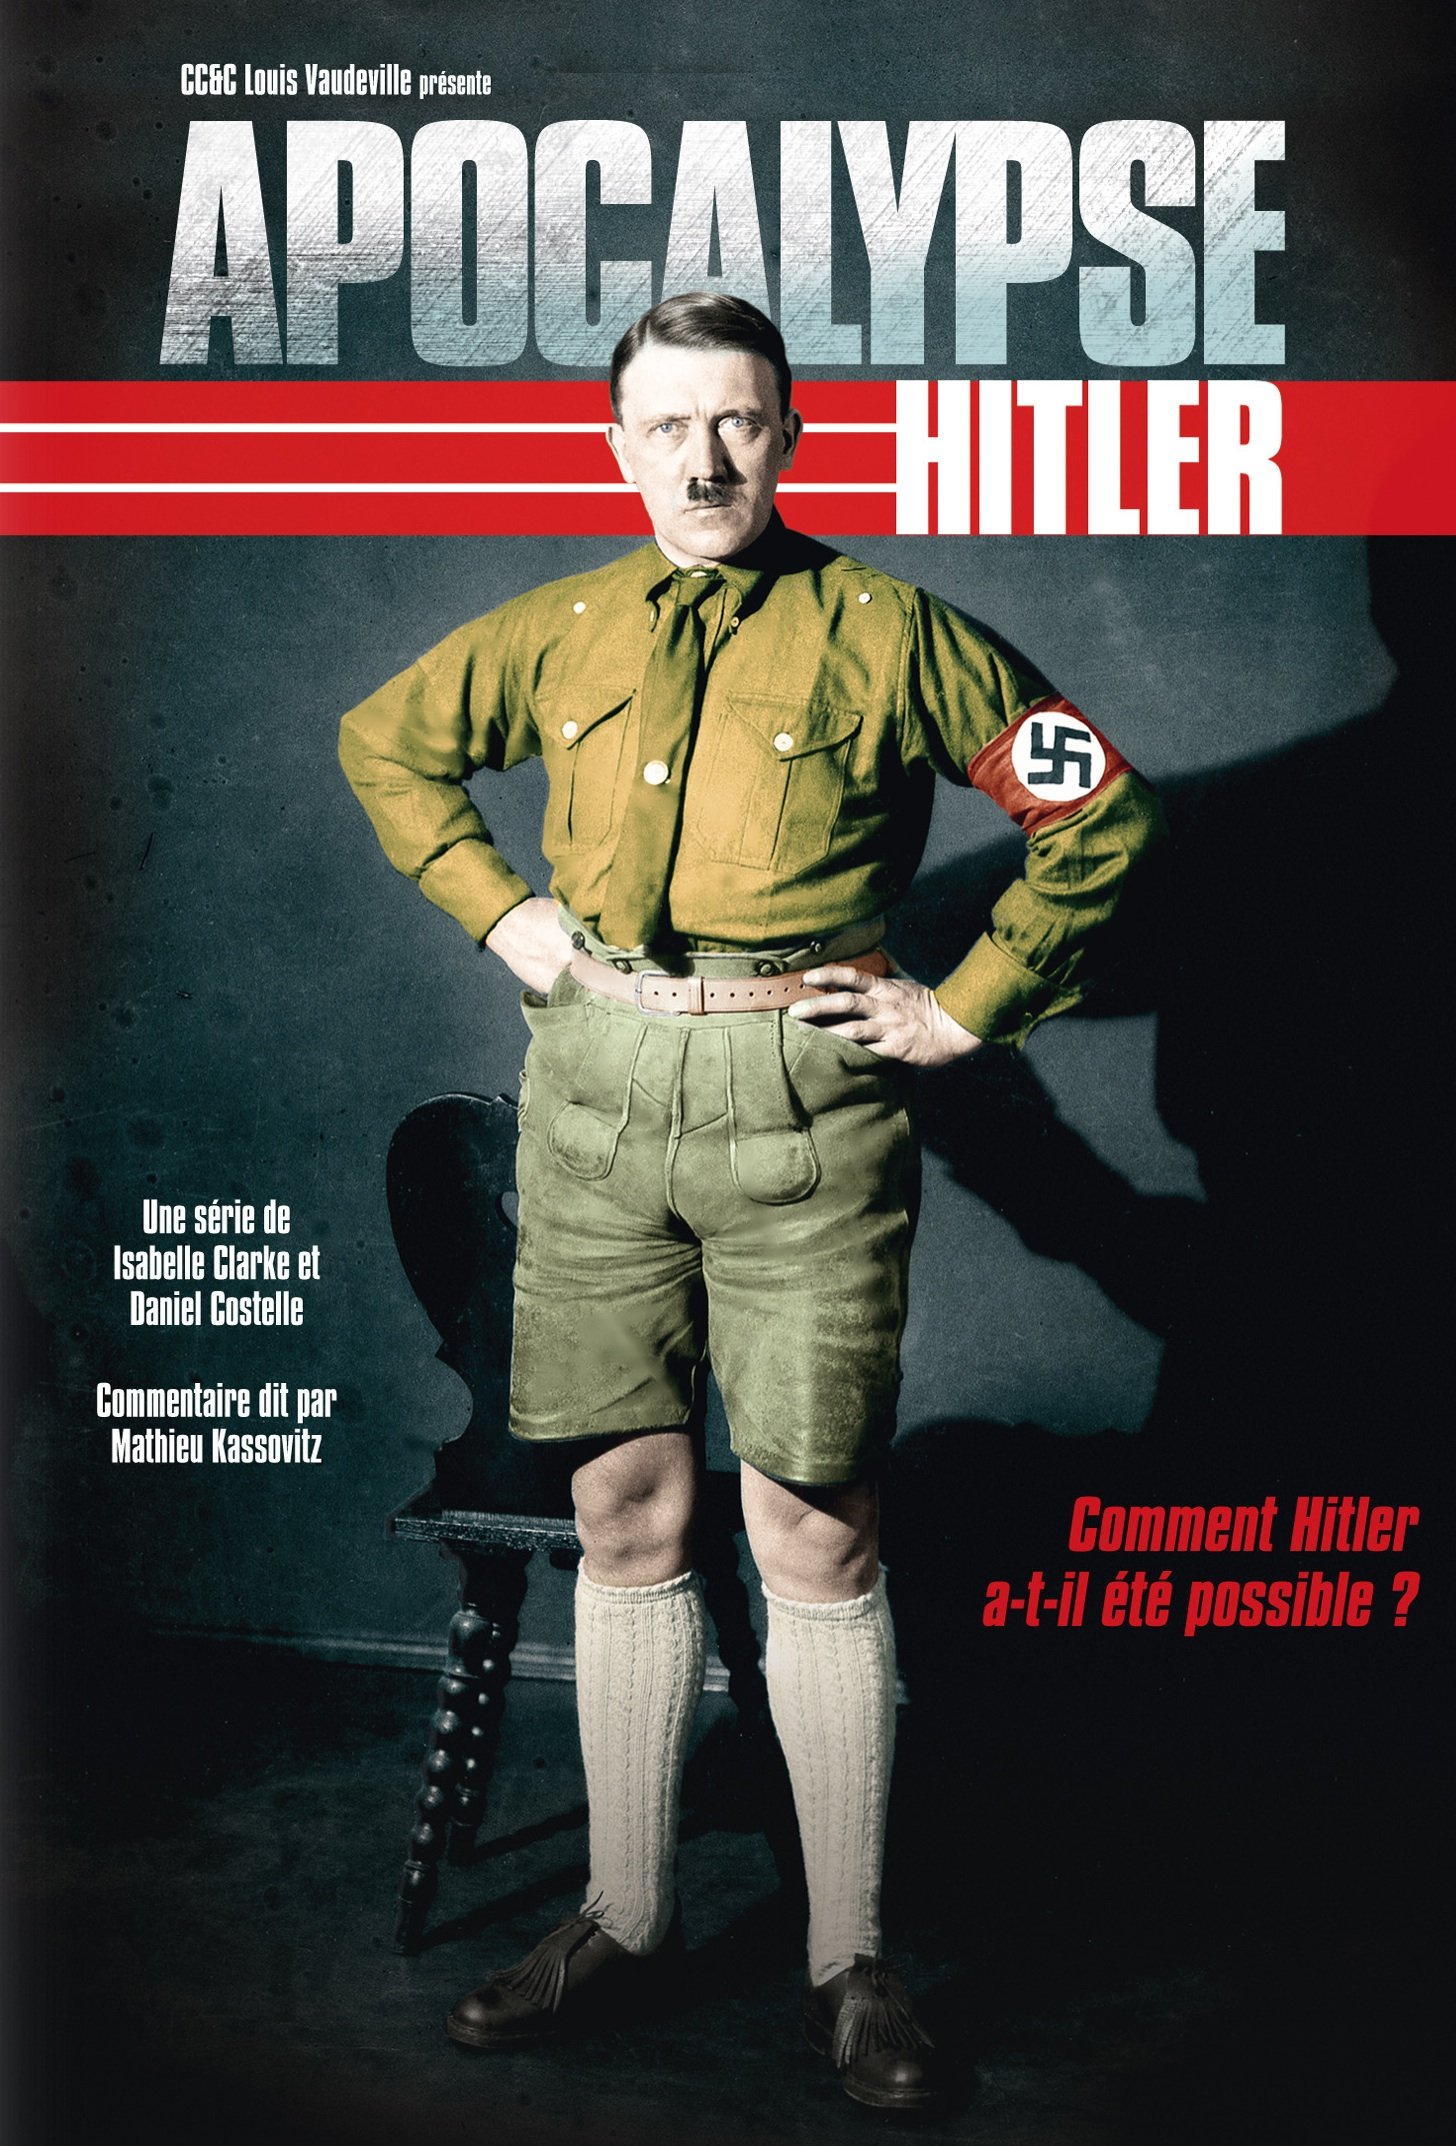 Poster of the movie Apocalypse: Hitler